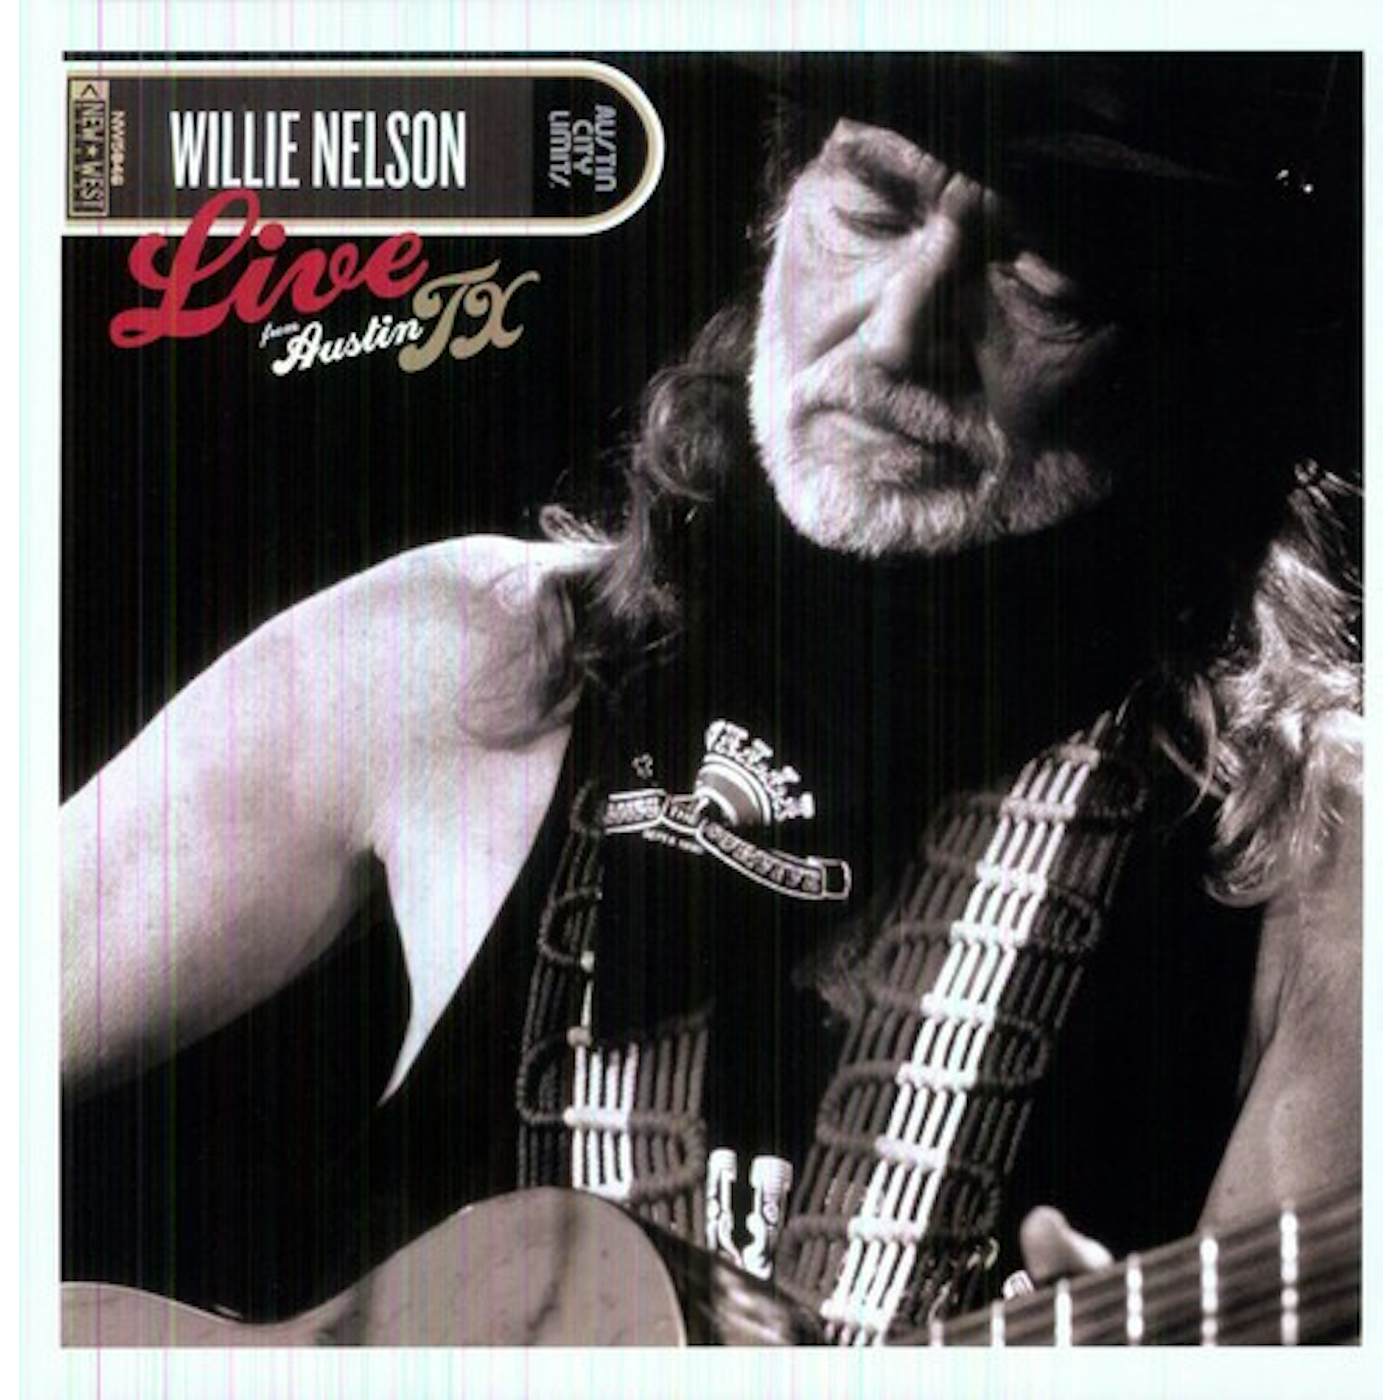 Willie Nelson LIVE FROM AUSTIN TX Vinyl Record